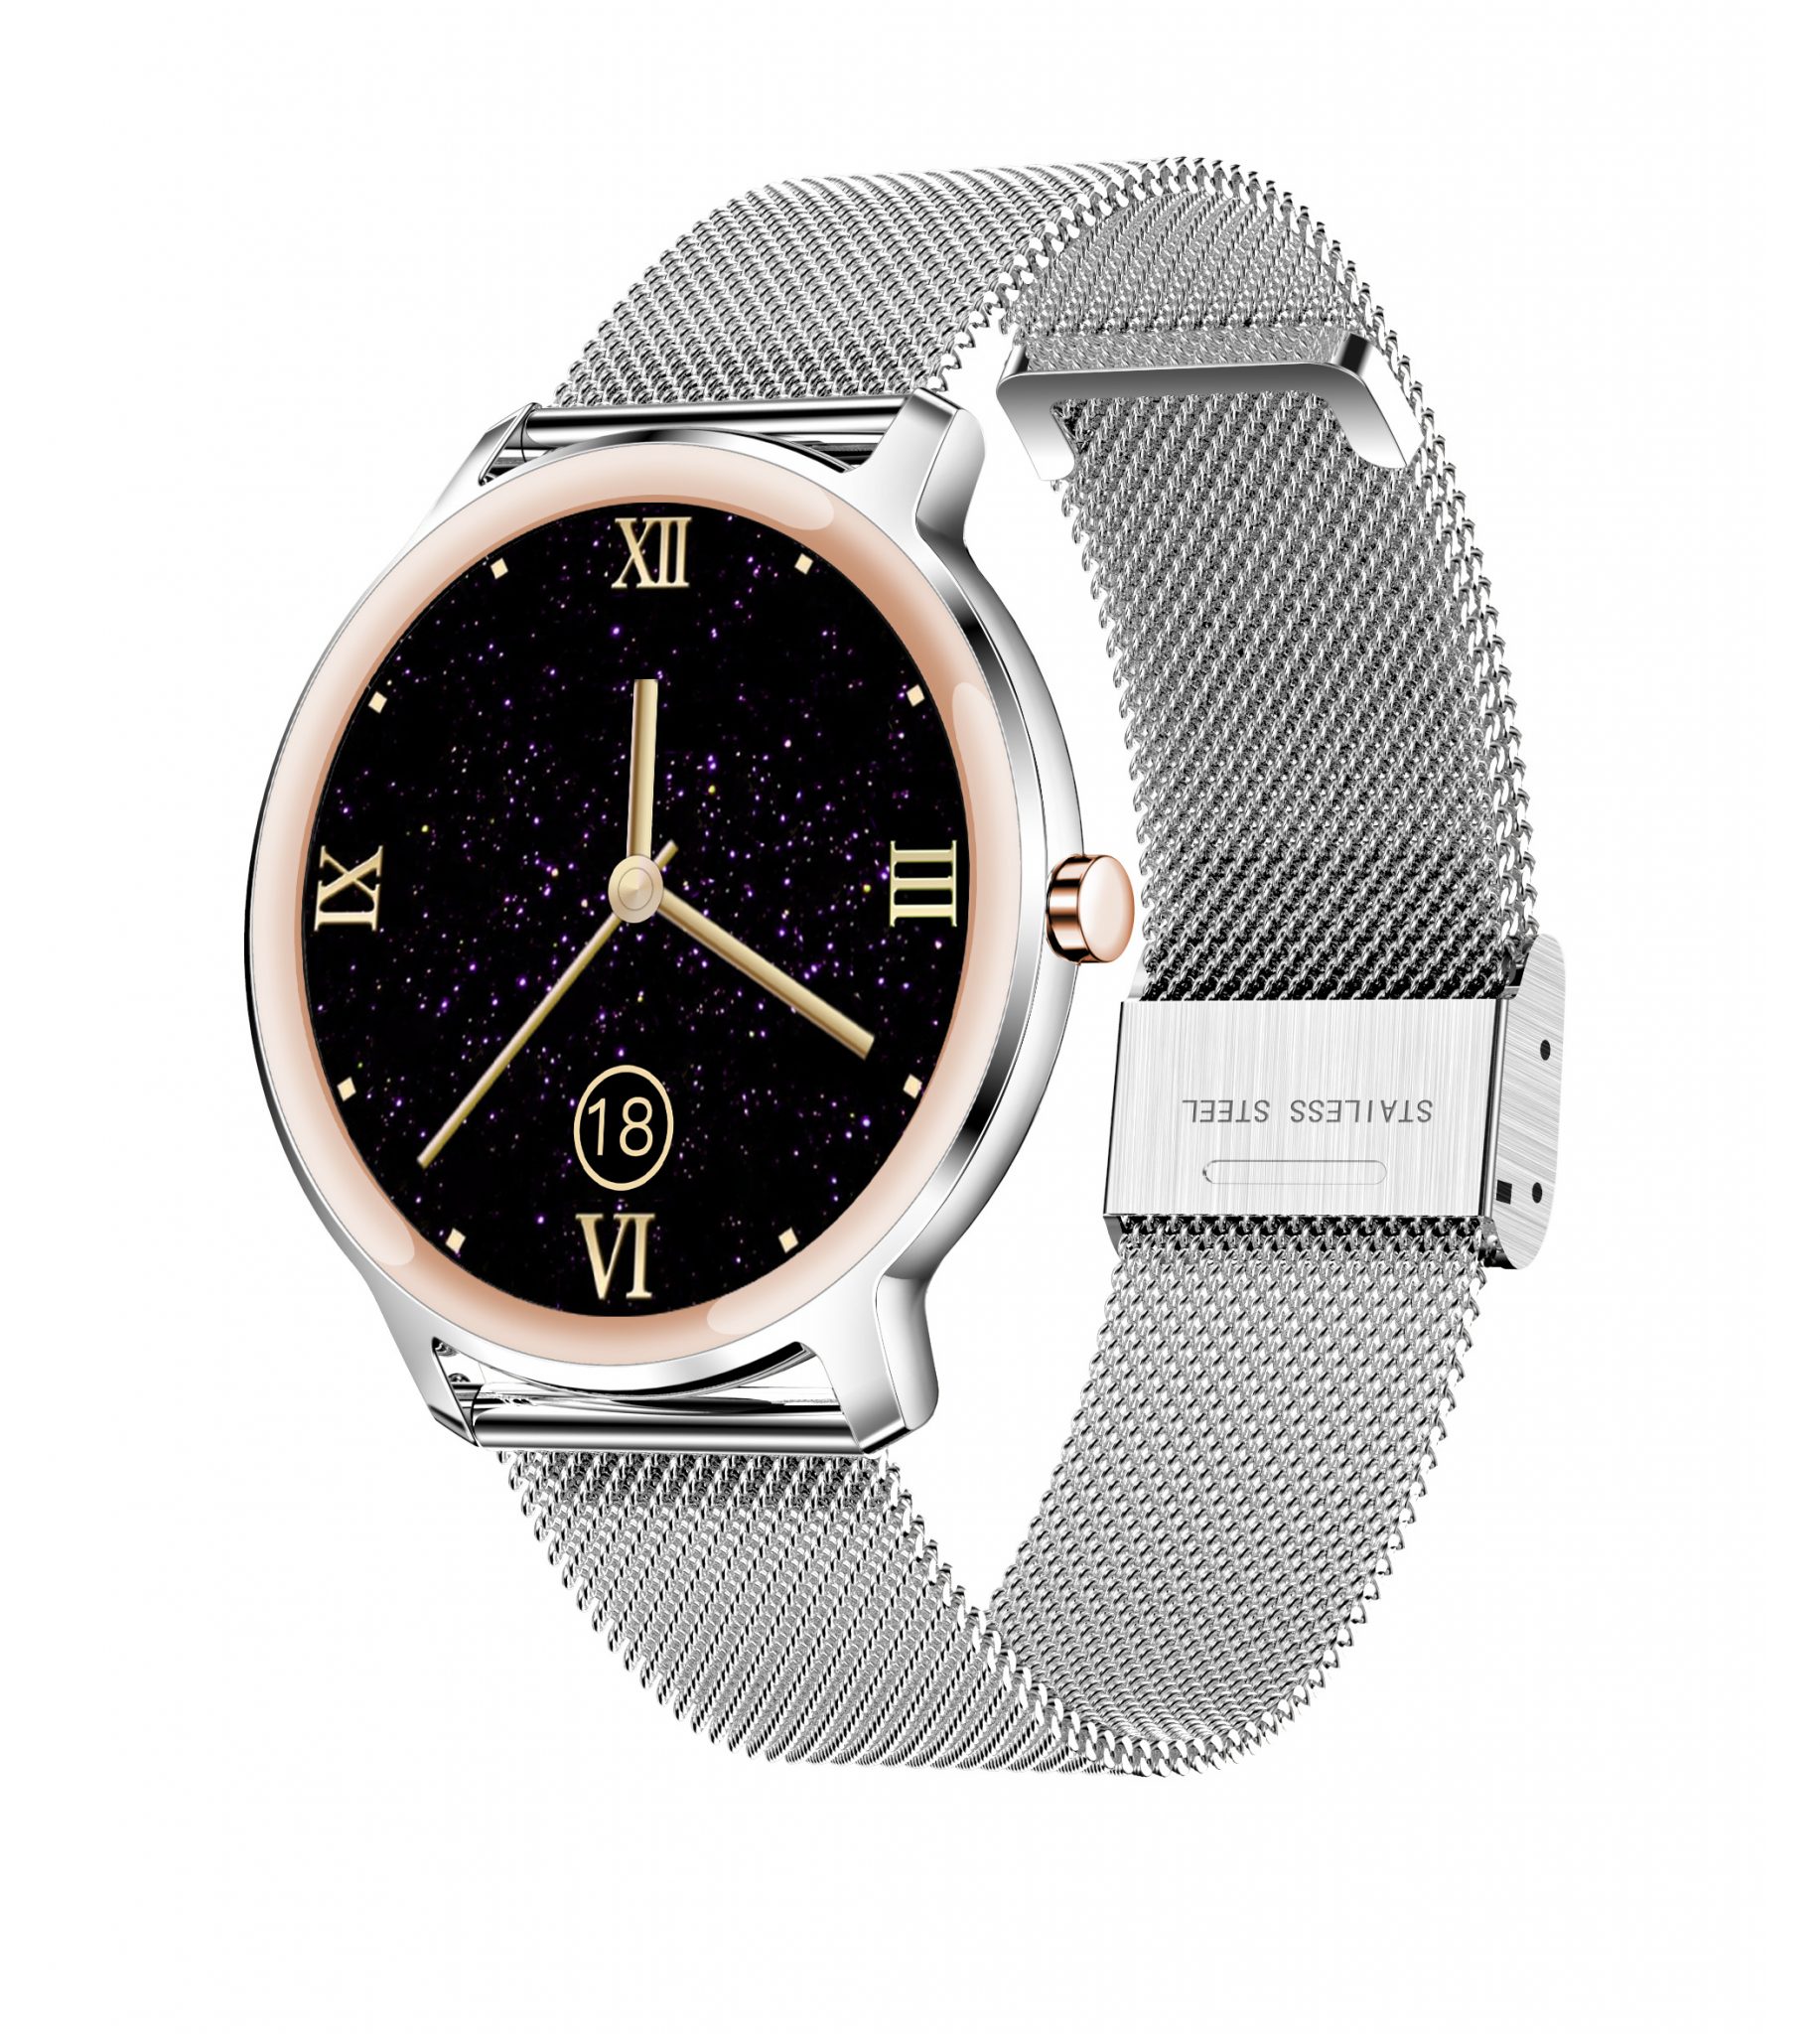 Ceas Smartwatch XK Fitness R18 cu Display 1.10 inch IPS, Functii sanatate, Notificari, Argintiu XK Fitness imagine 2022 crono24.ro